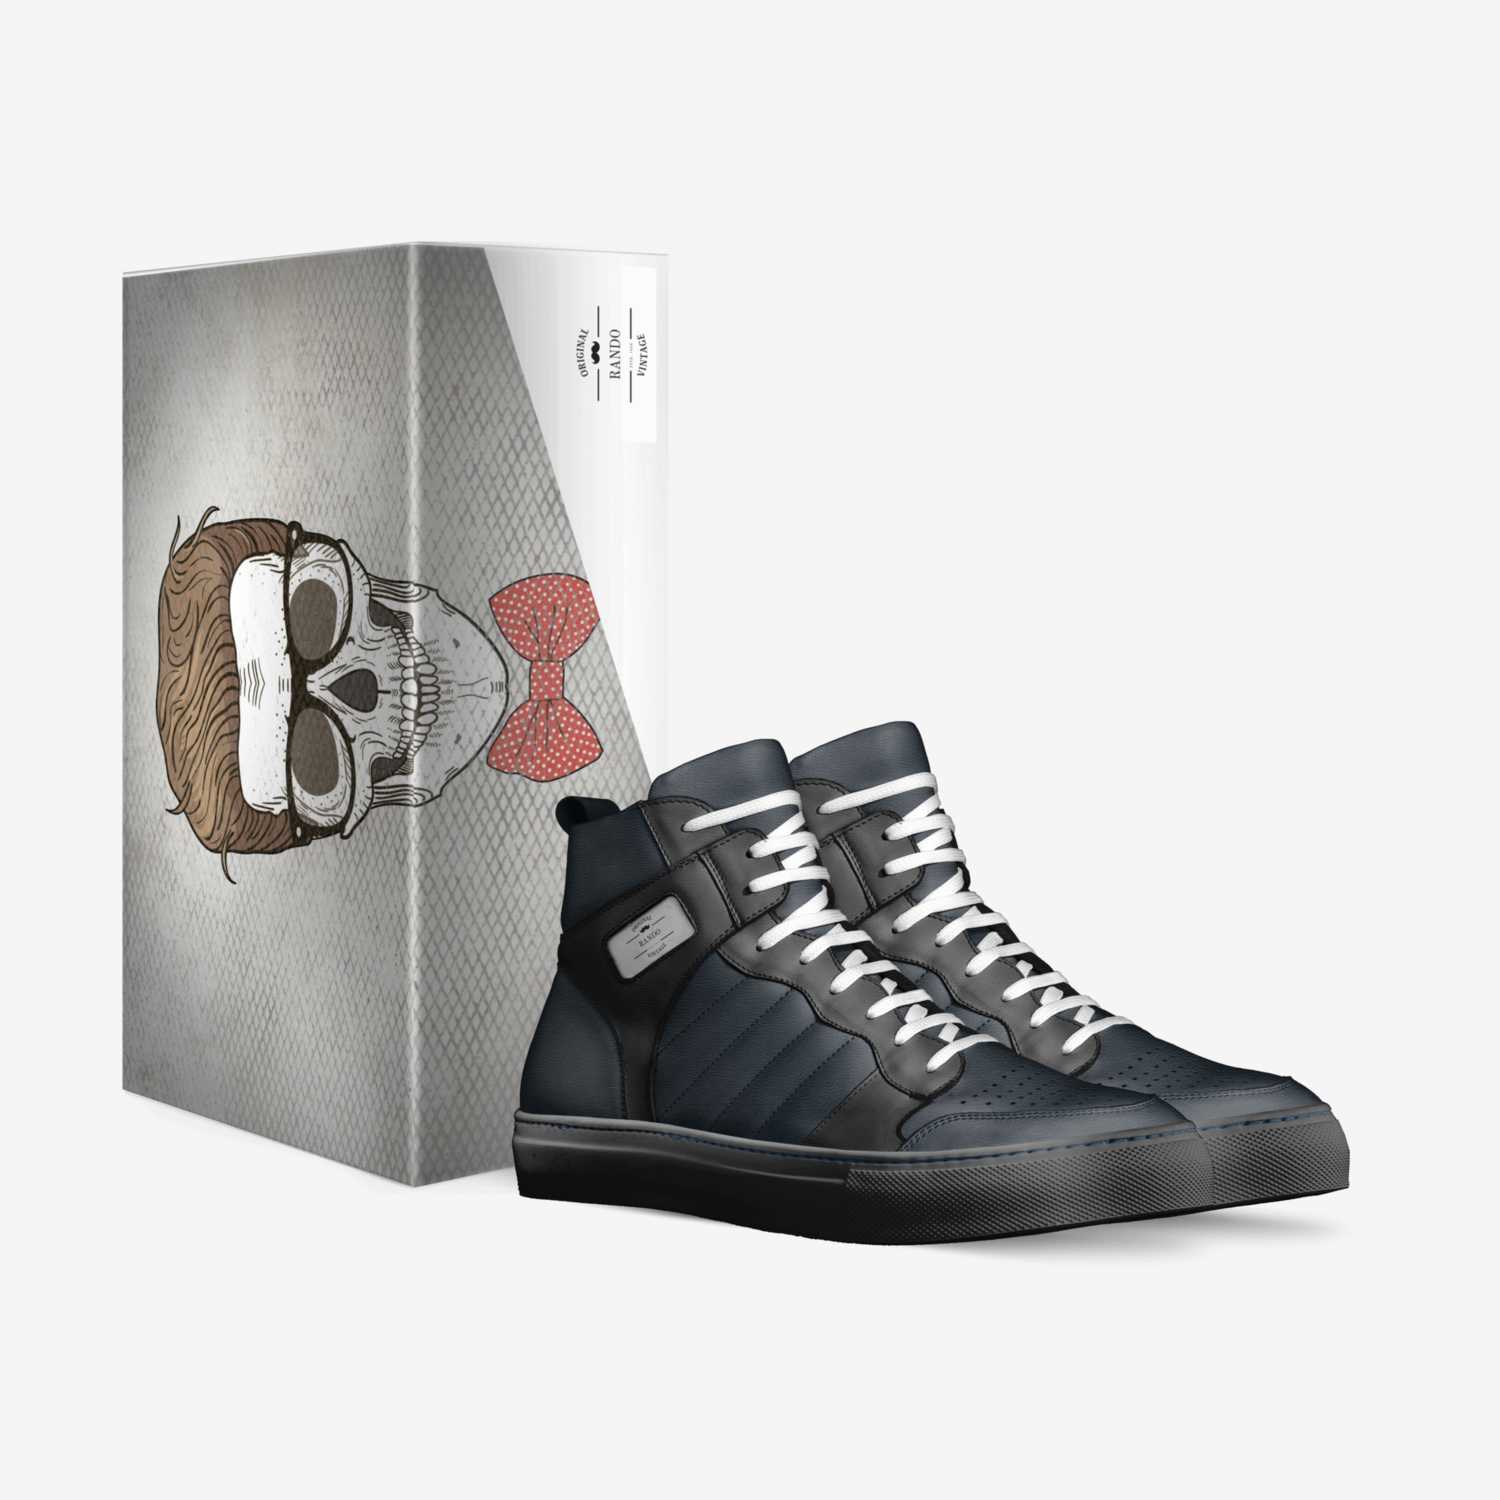 rando custom made in Italy shoes by Shana Justice | Box view